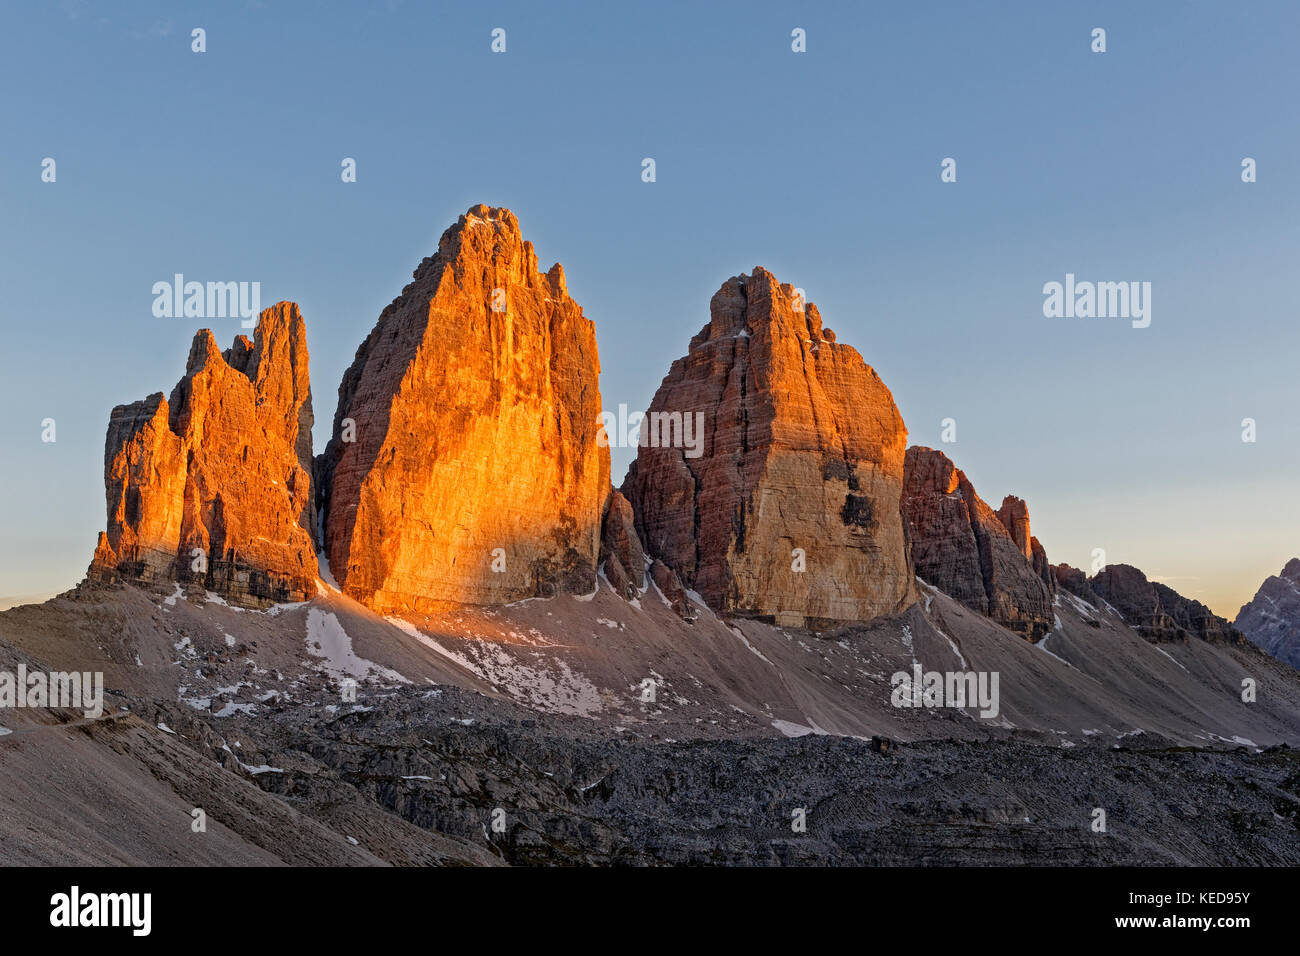 North Face der Drei Zinnen bei Sonnenuntergang, Sextner Dolomiten, Südtirol, Italien, Europa Stockfoto